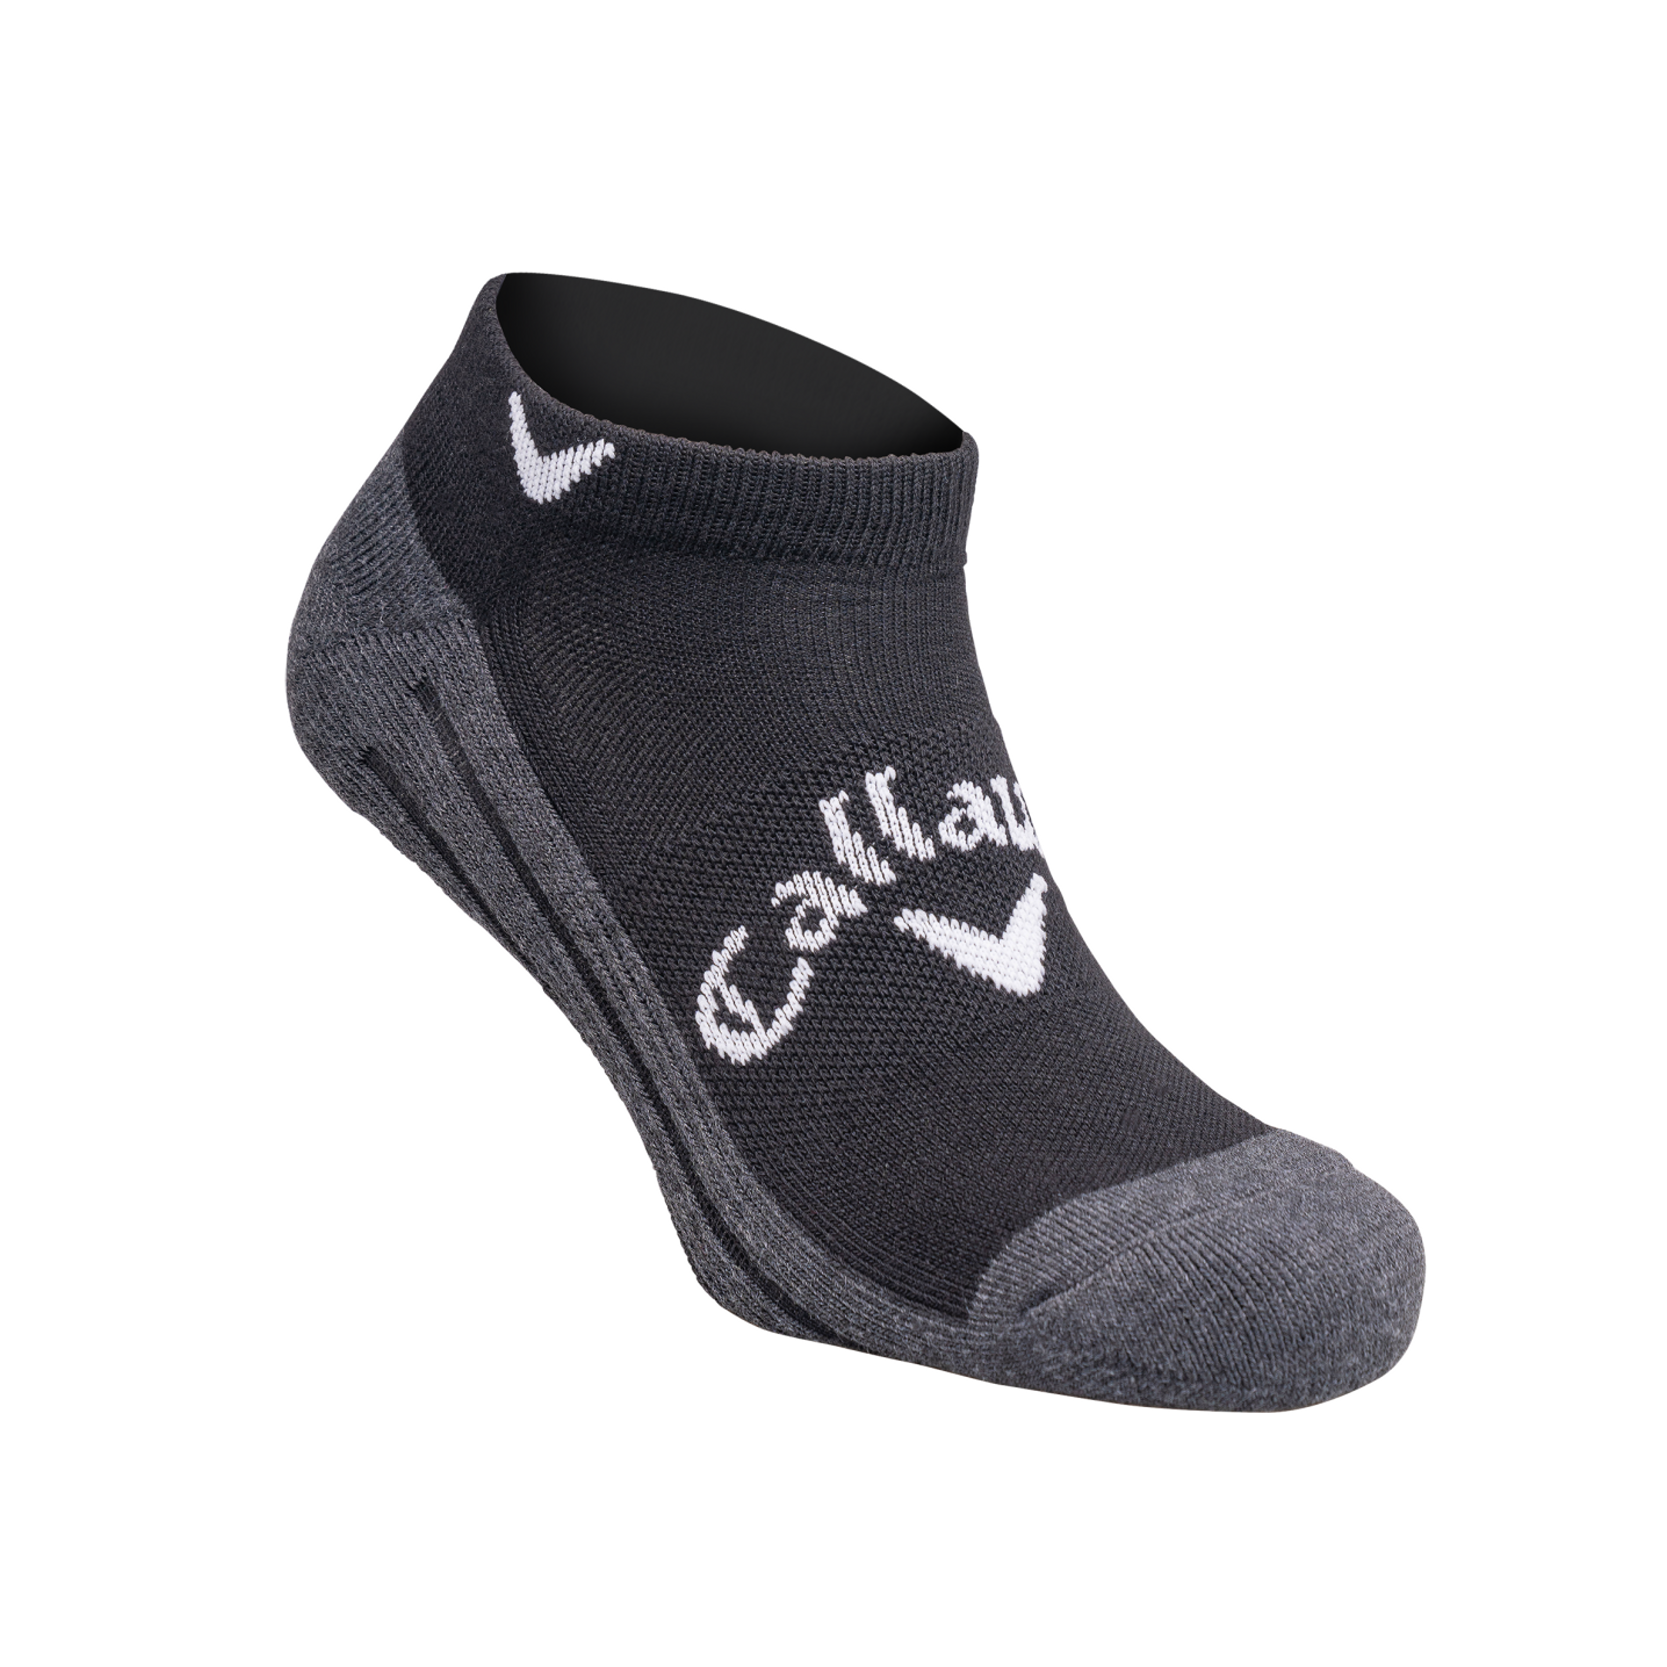 Callaway Tour Opti-Dri Low II pánské golfové ponožky, černé, vel. L/XL